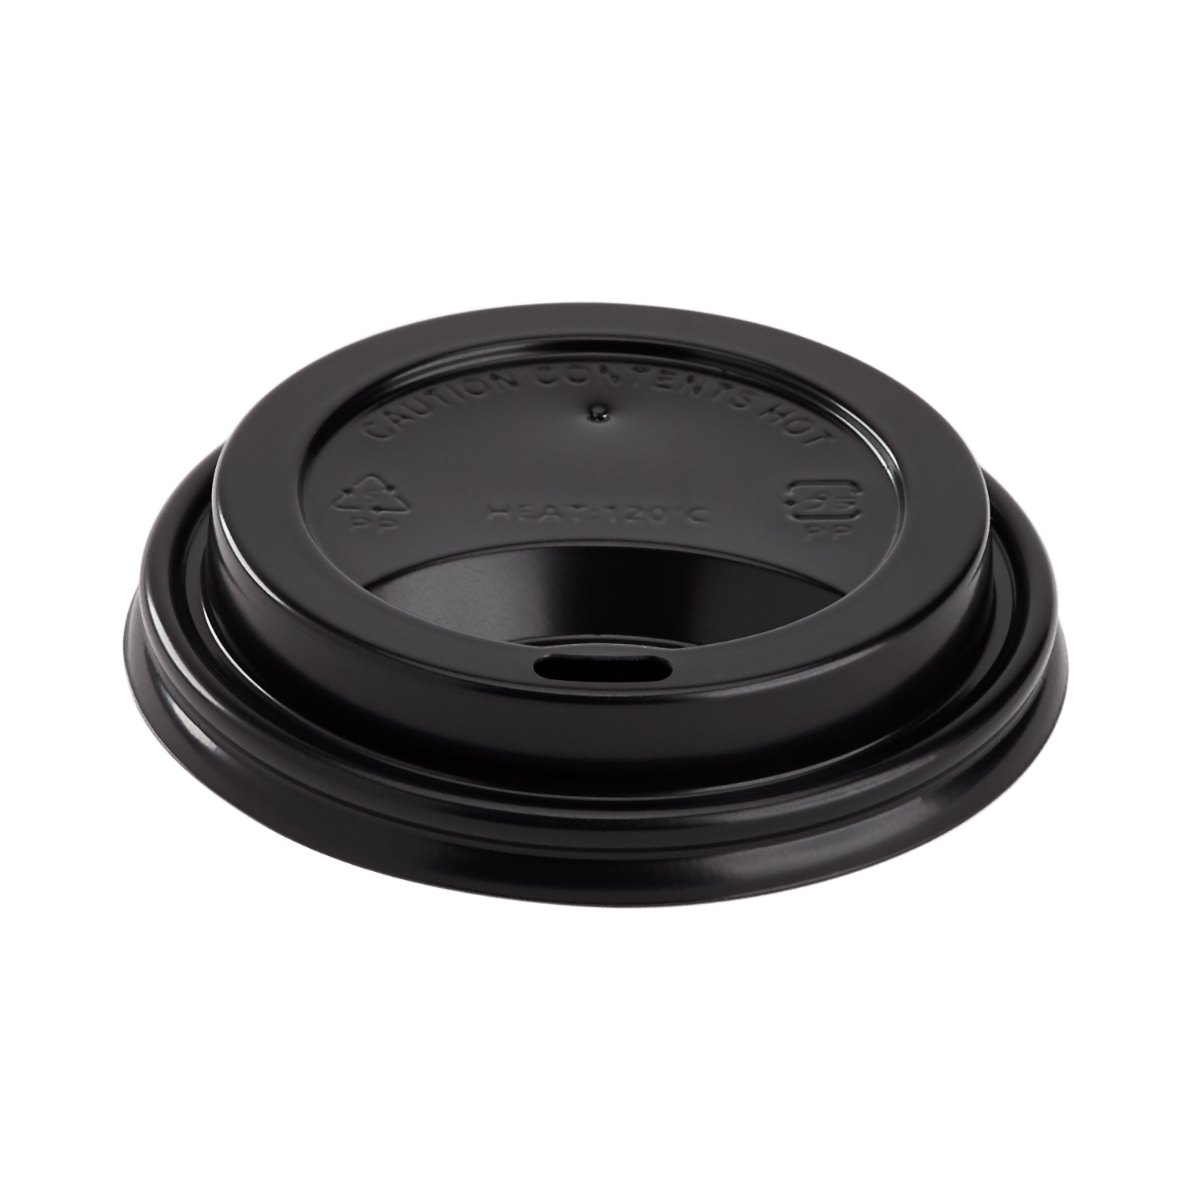 Karat 8oz Sipper Dome Lids - Black (80mm) - 1,000 ct